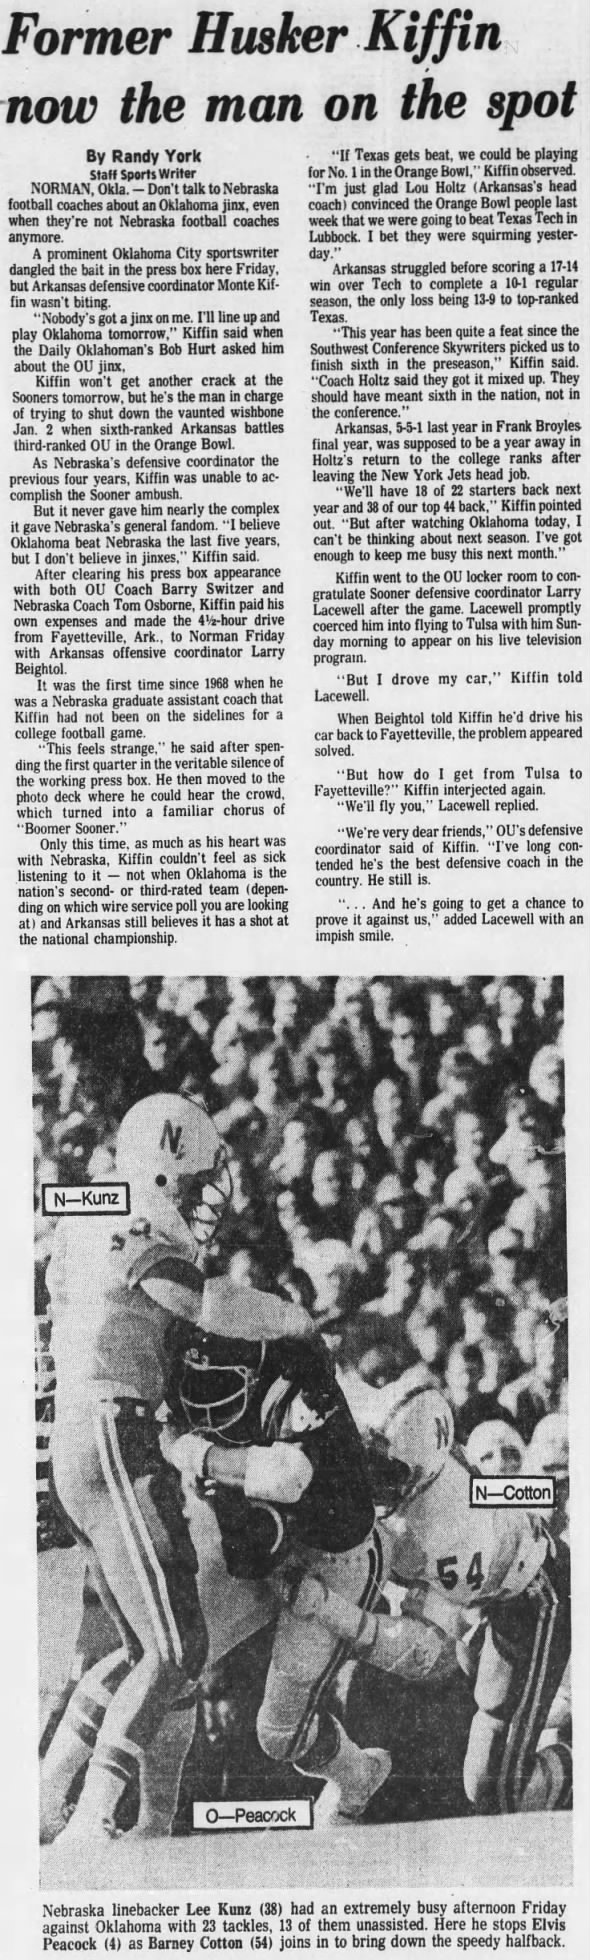 1977 Nebraska-Oklahoma football, LJ3